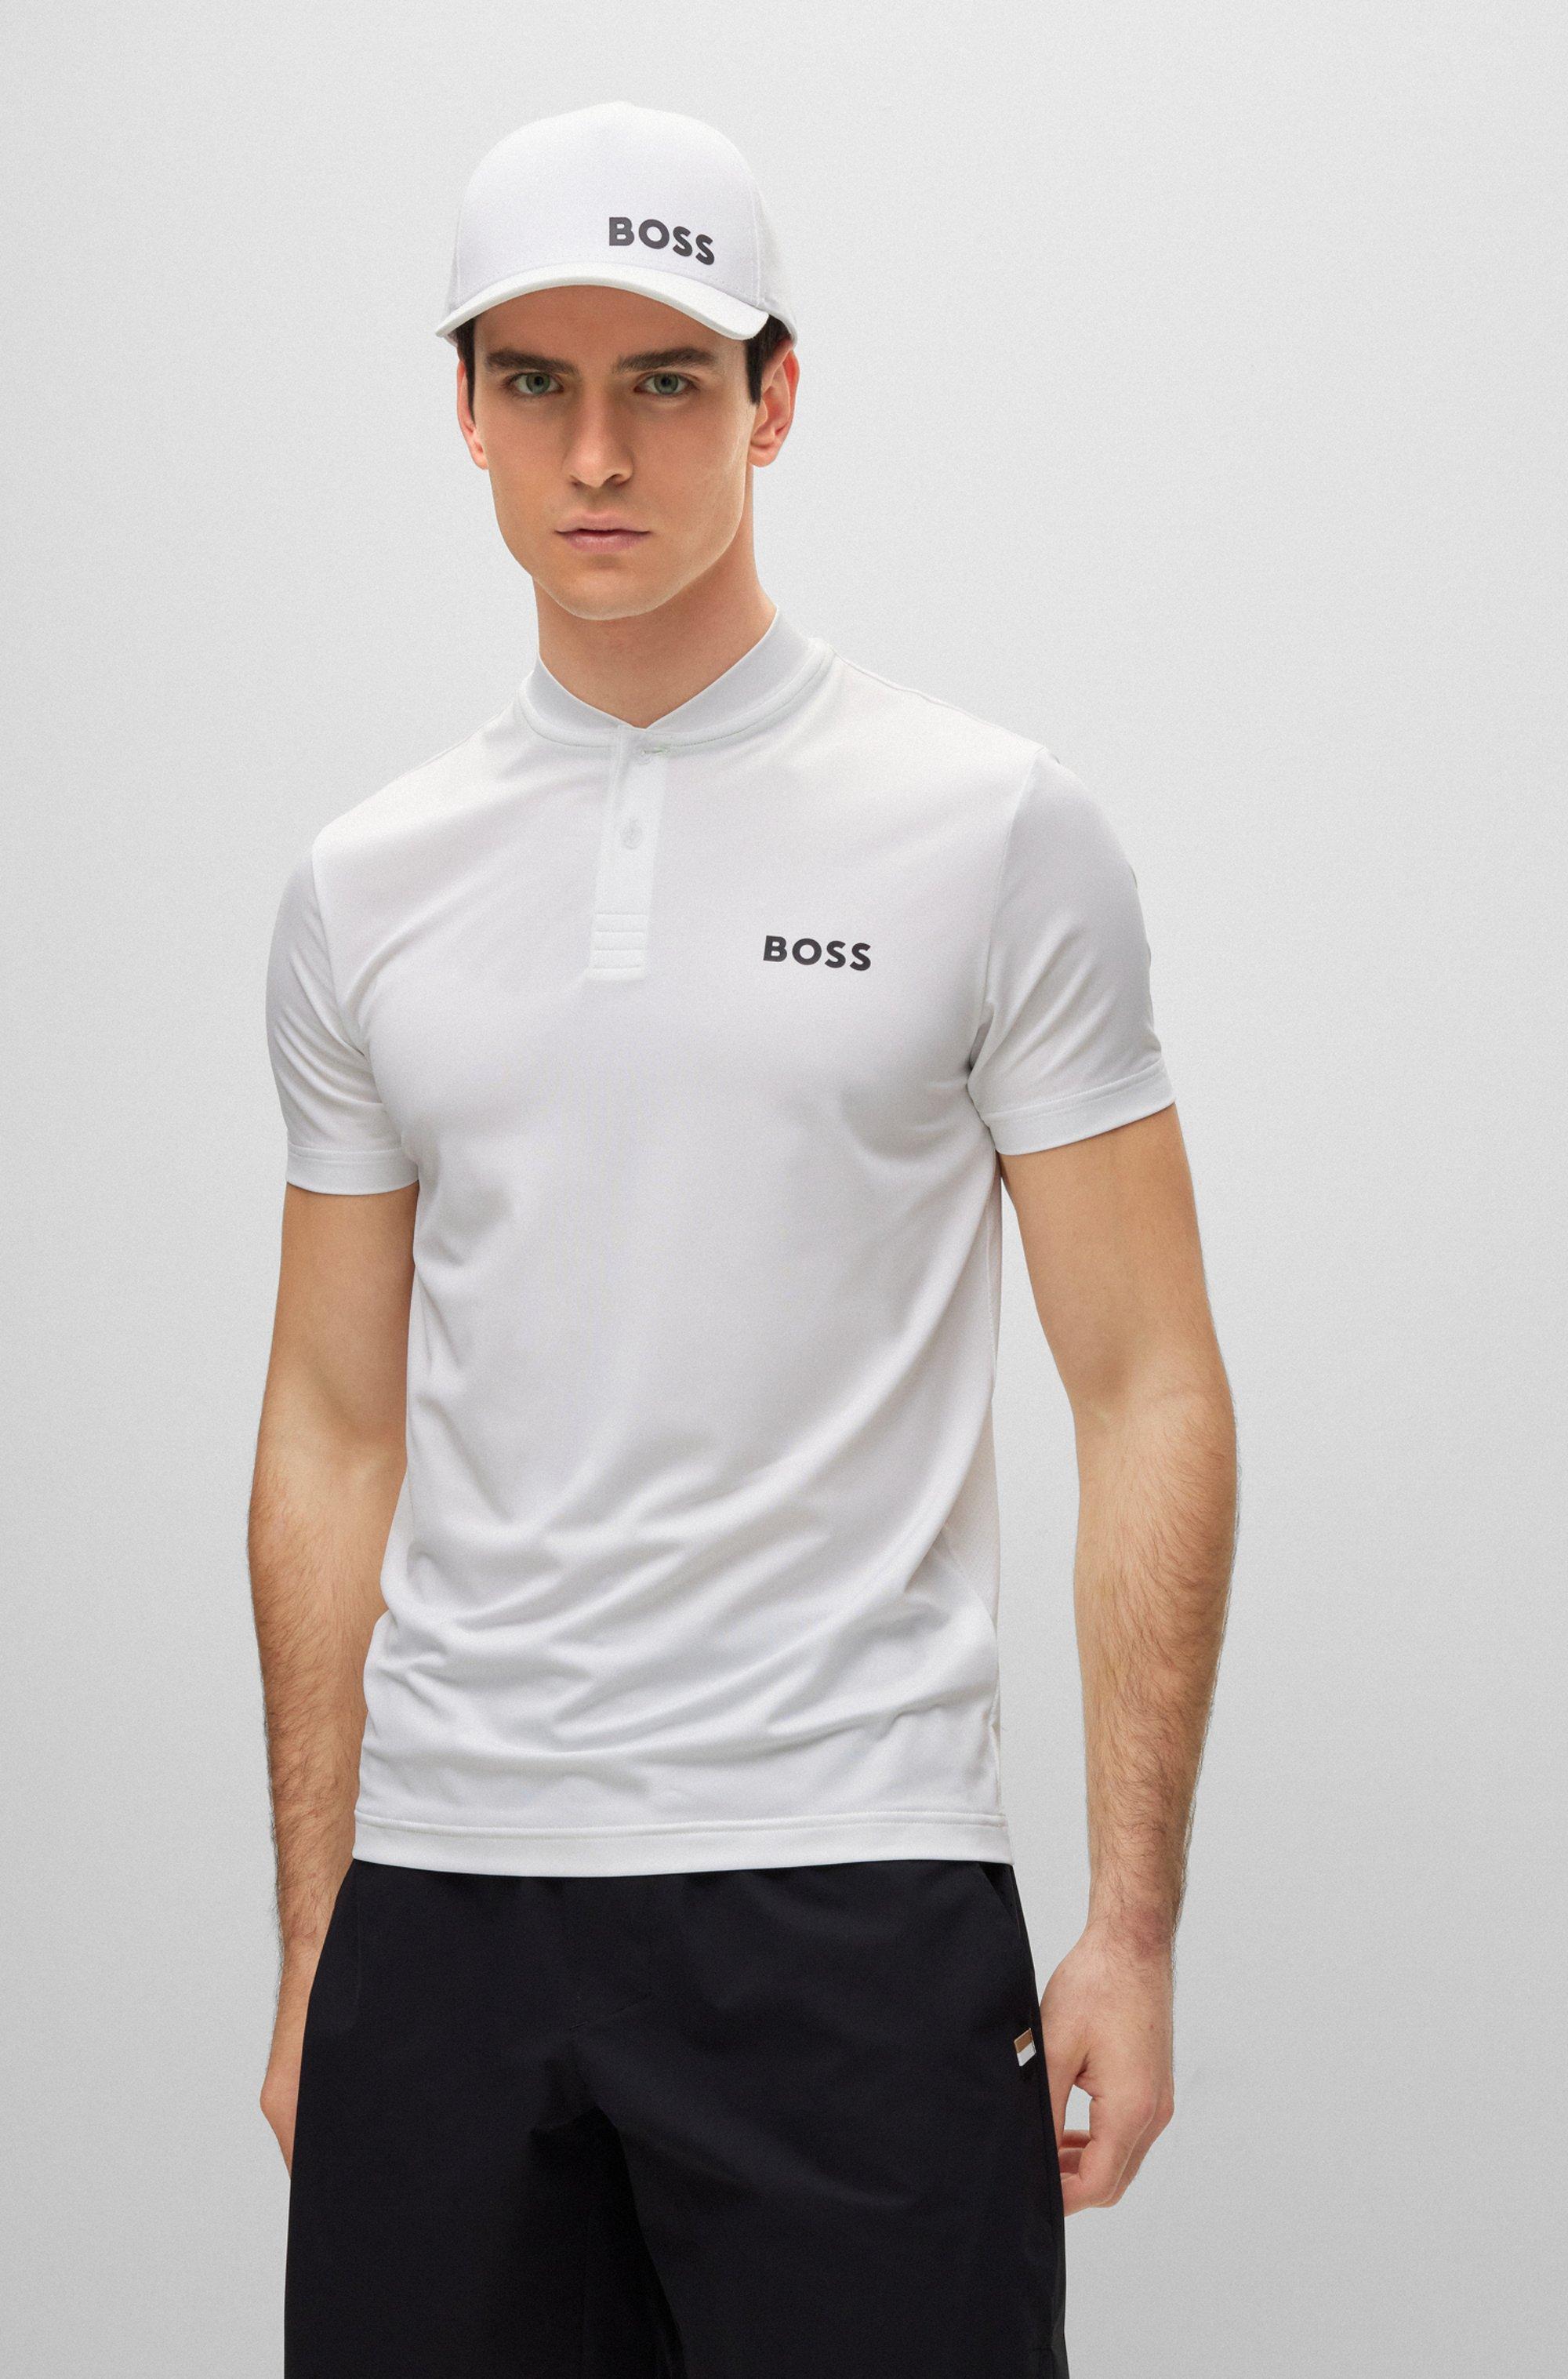 BOSS by HUGO BOSS X Matteo Berrettini Slim-fit Polo Shirt With Bomber ...